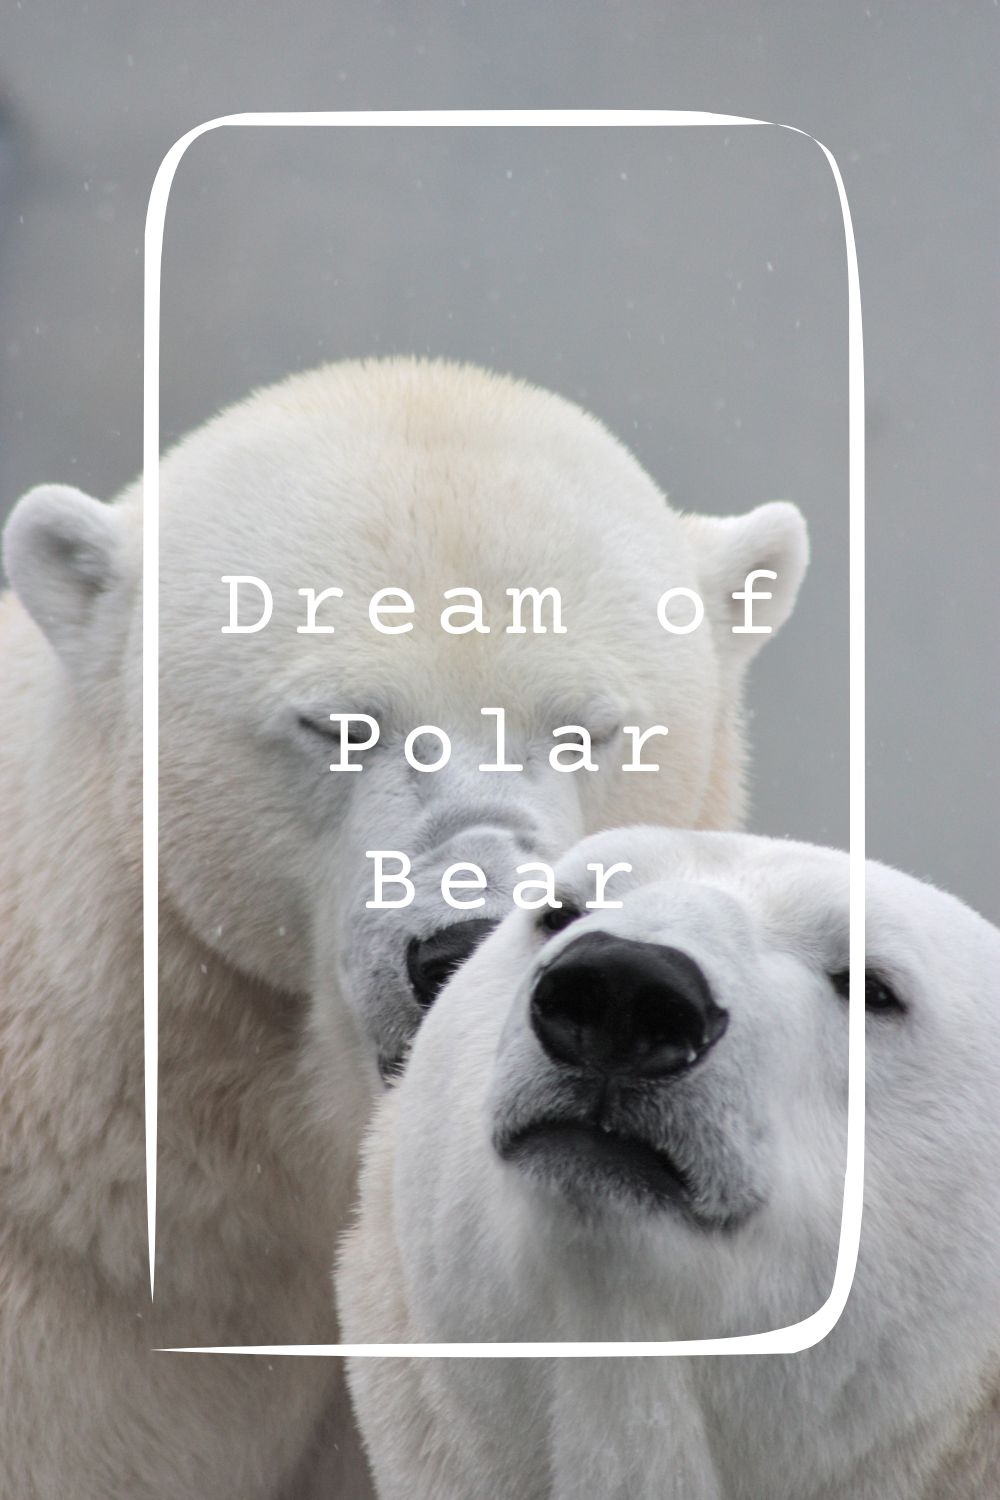 8 Dream of Polar Bear Meanings1